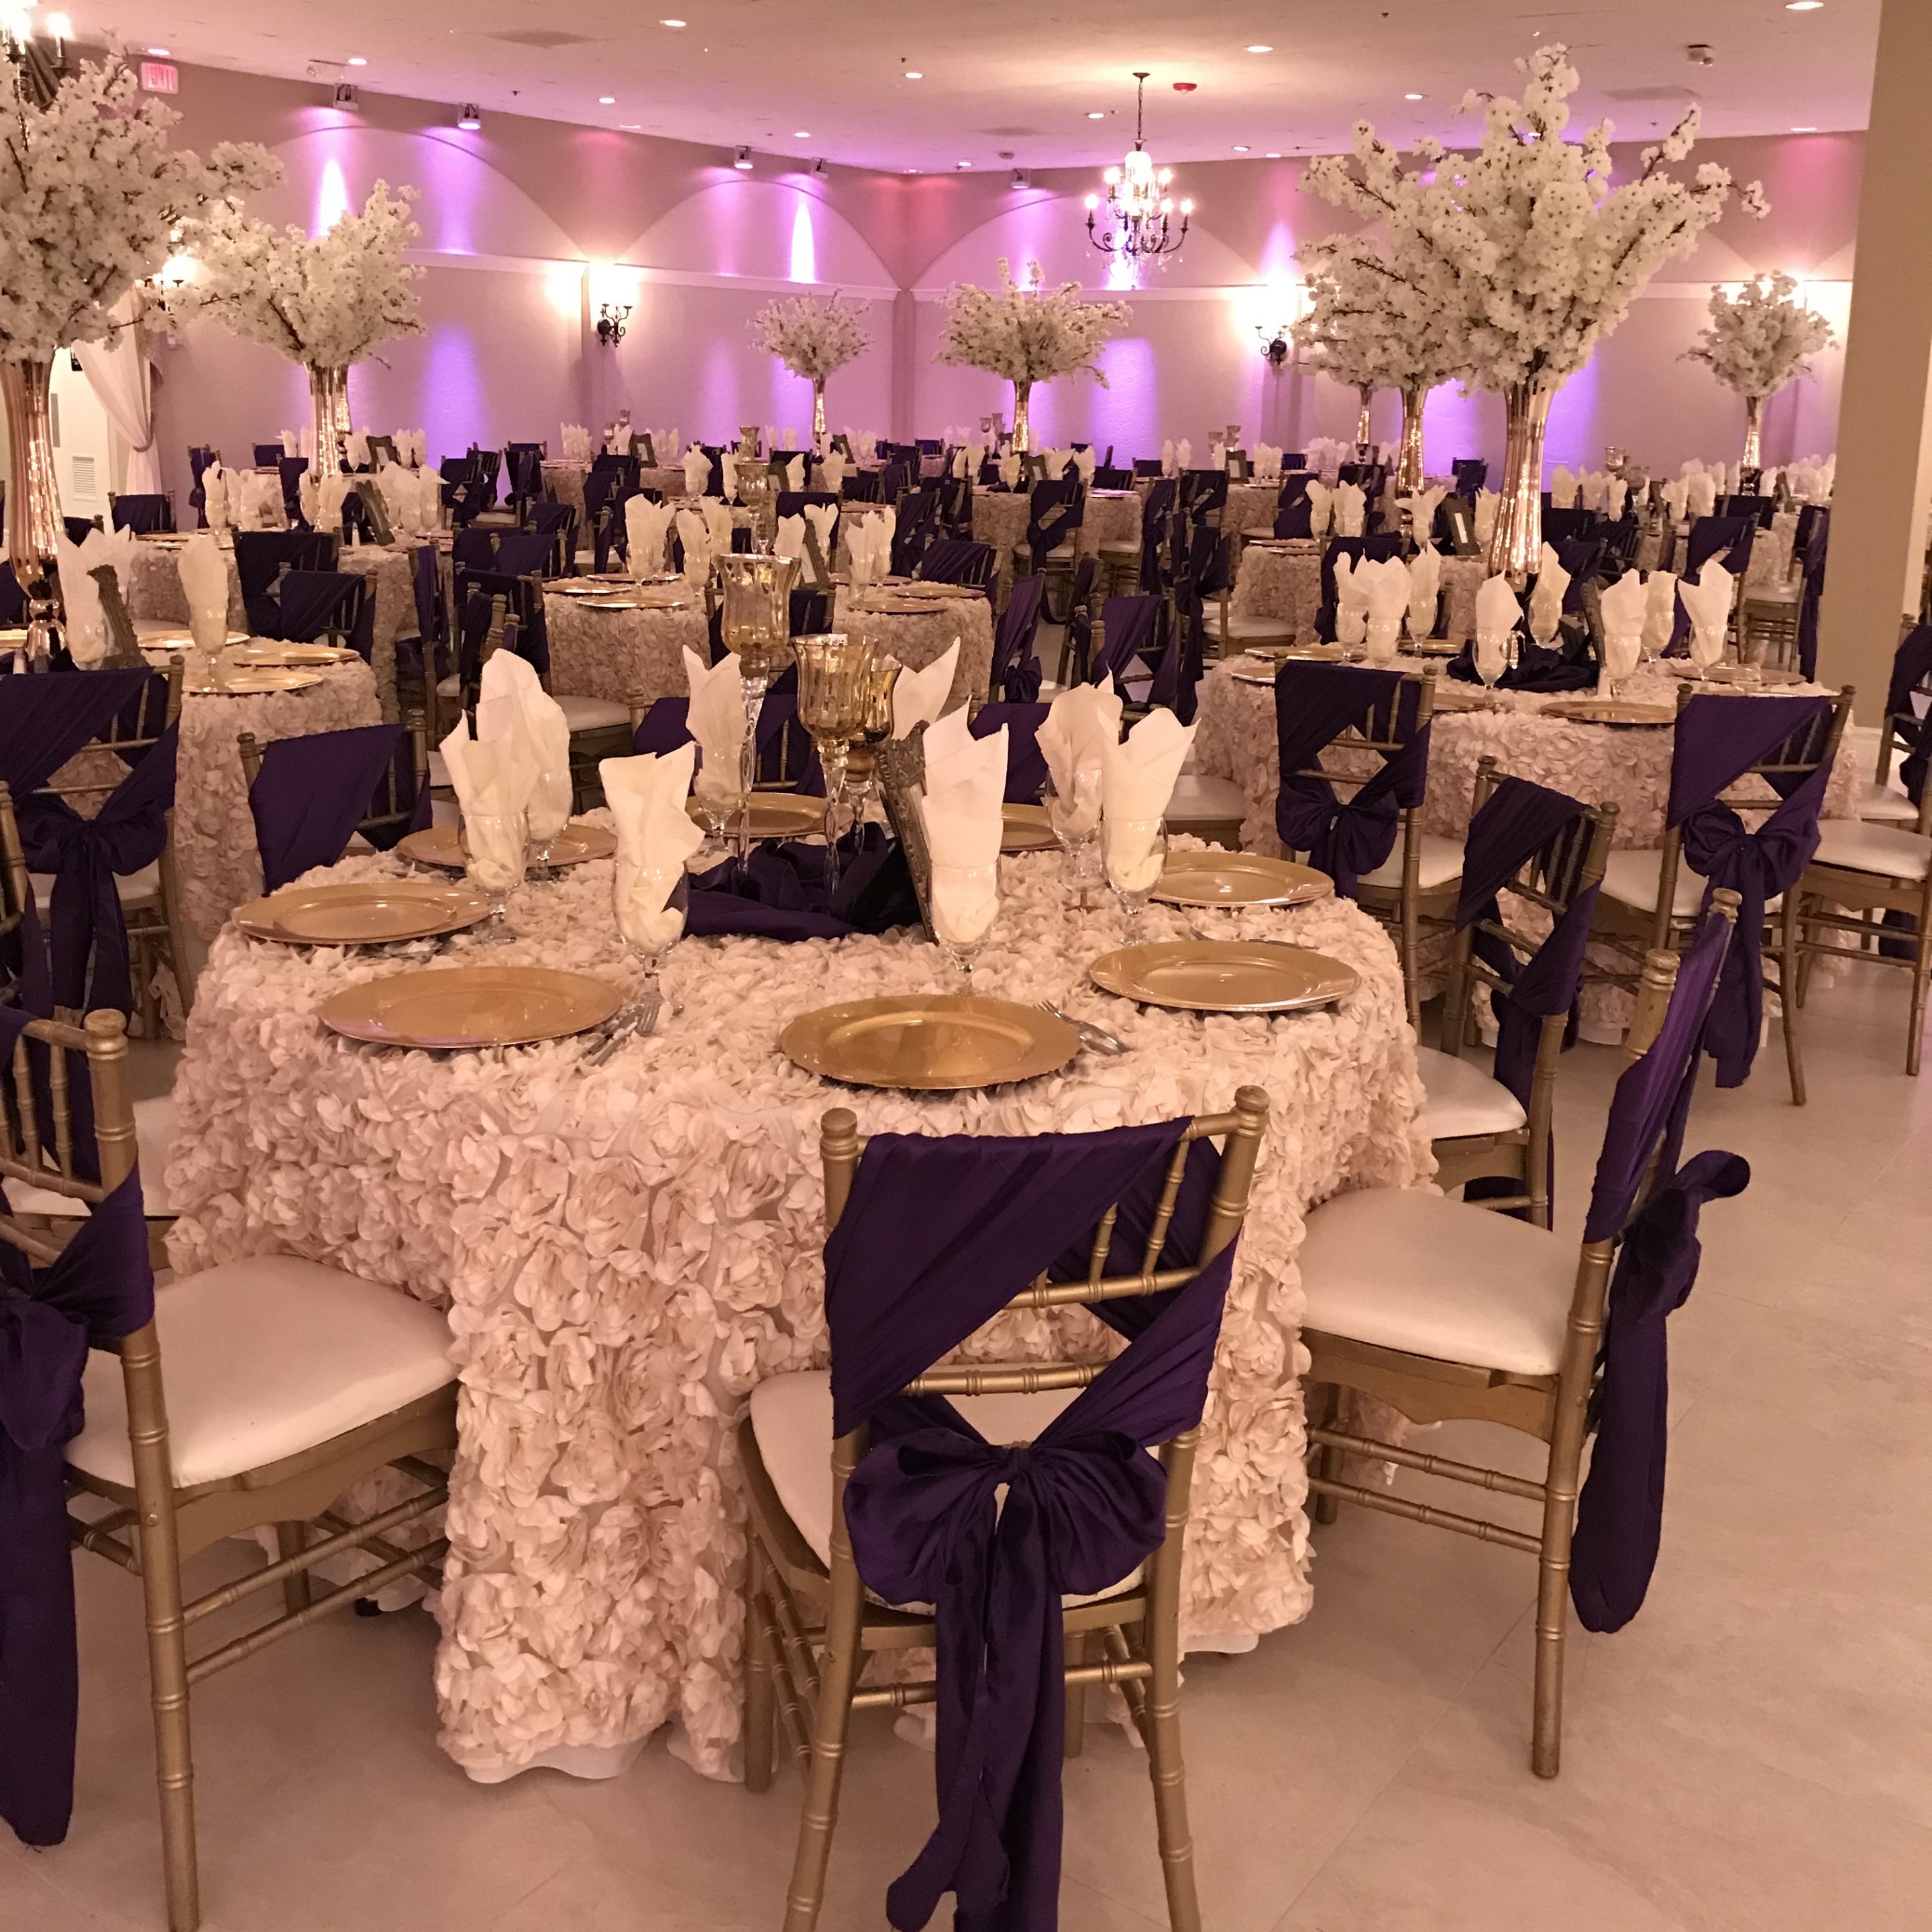 Villa Tuscana Reception Hall event showing Wedding reception tables